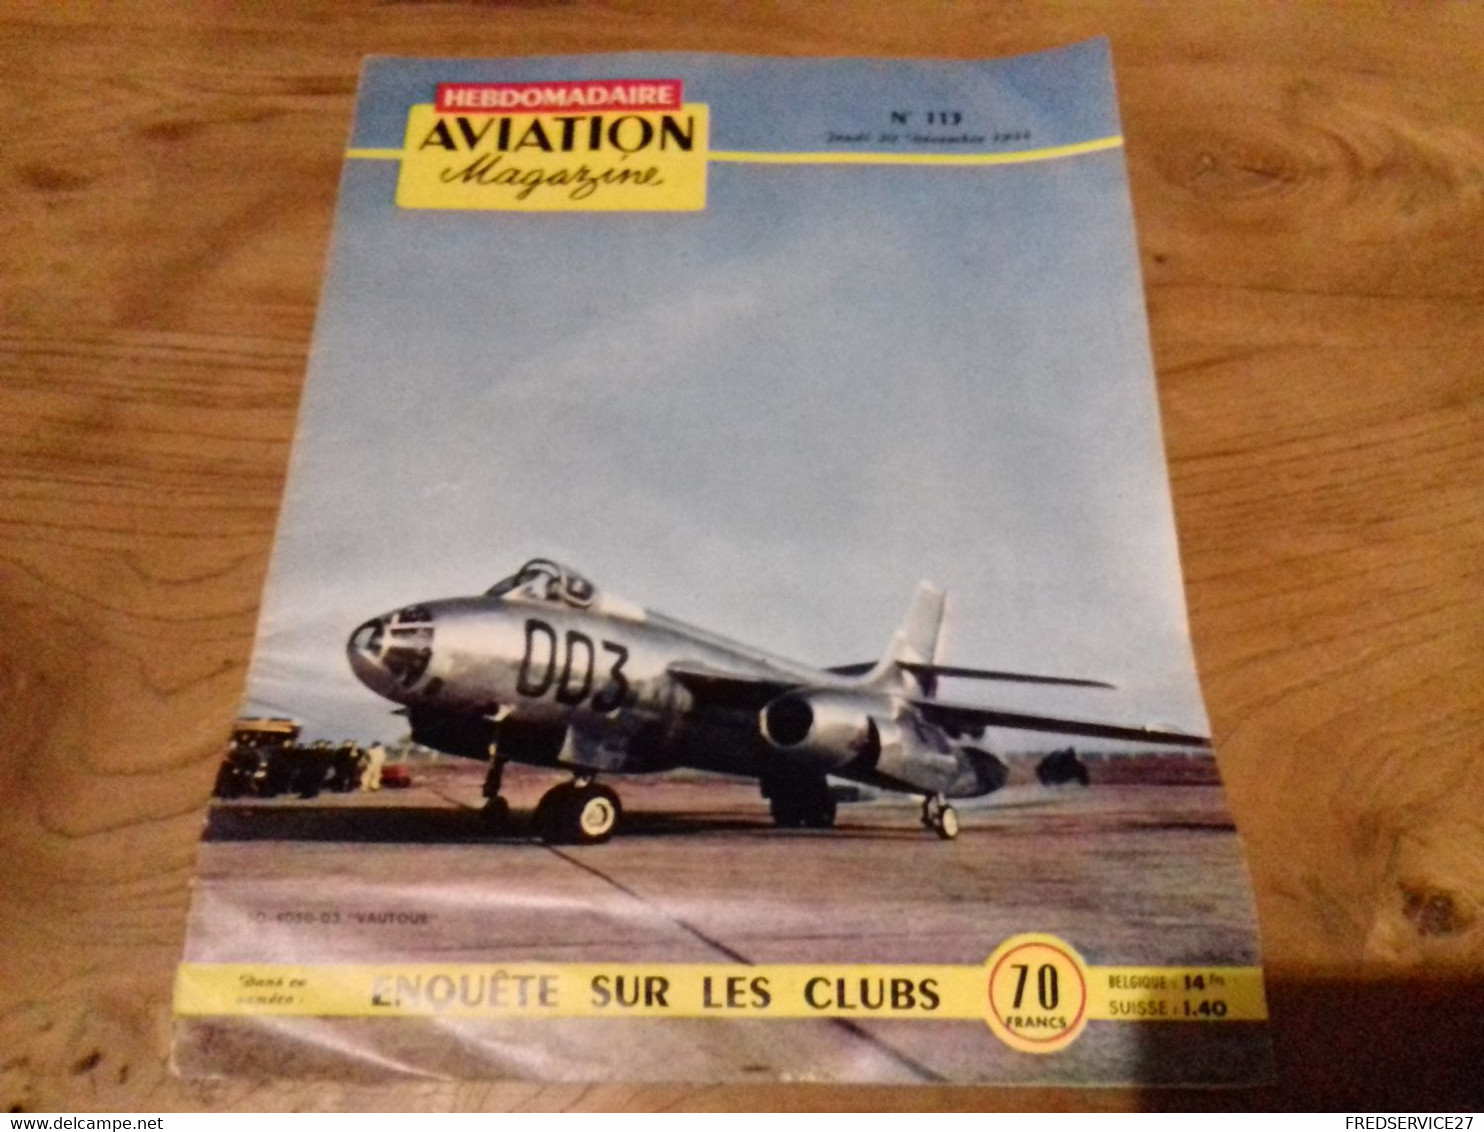 40/ AVIATION MAGAZINE N° 113 1954 SO 4050 03 VAUTOUR / SIPA 300/ HELICOPTERE AVION ECT - Aviation